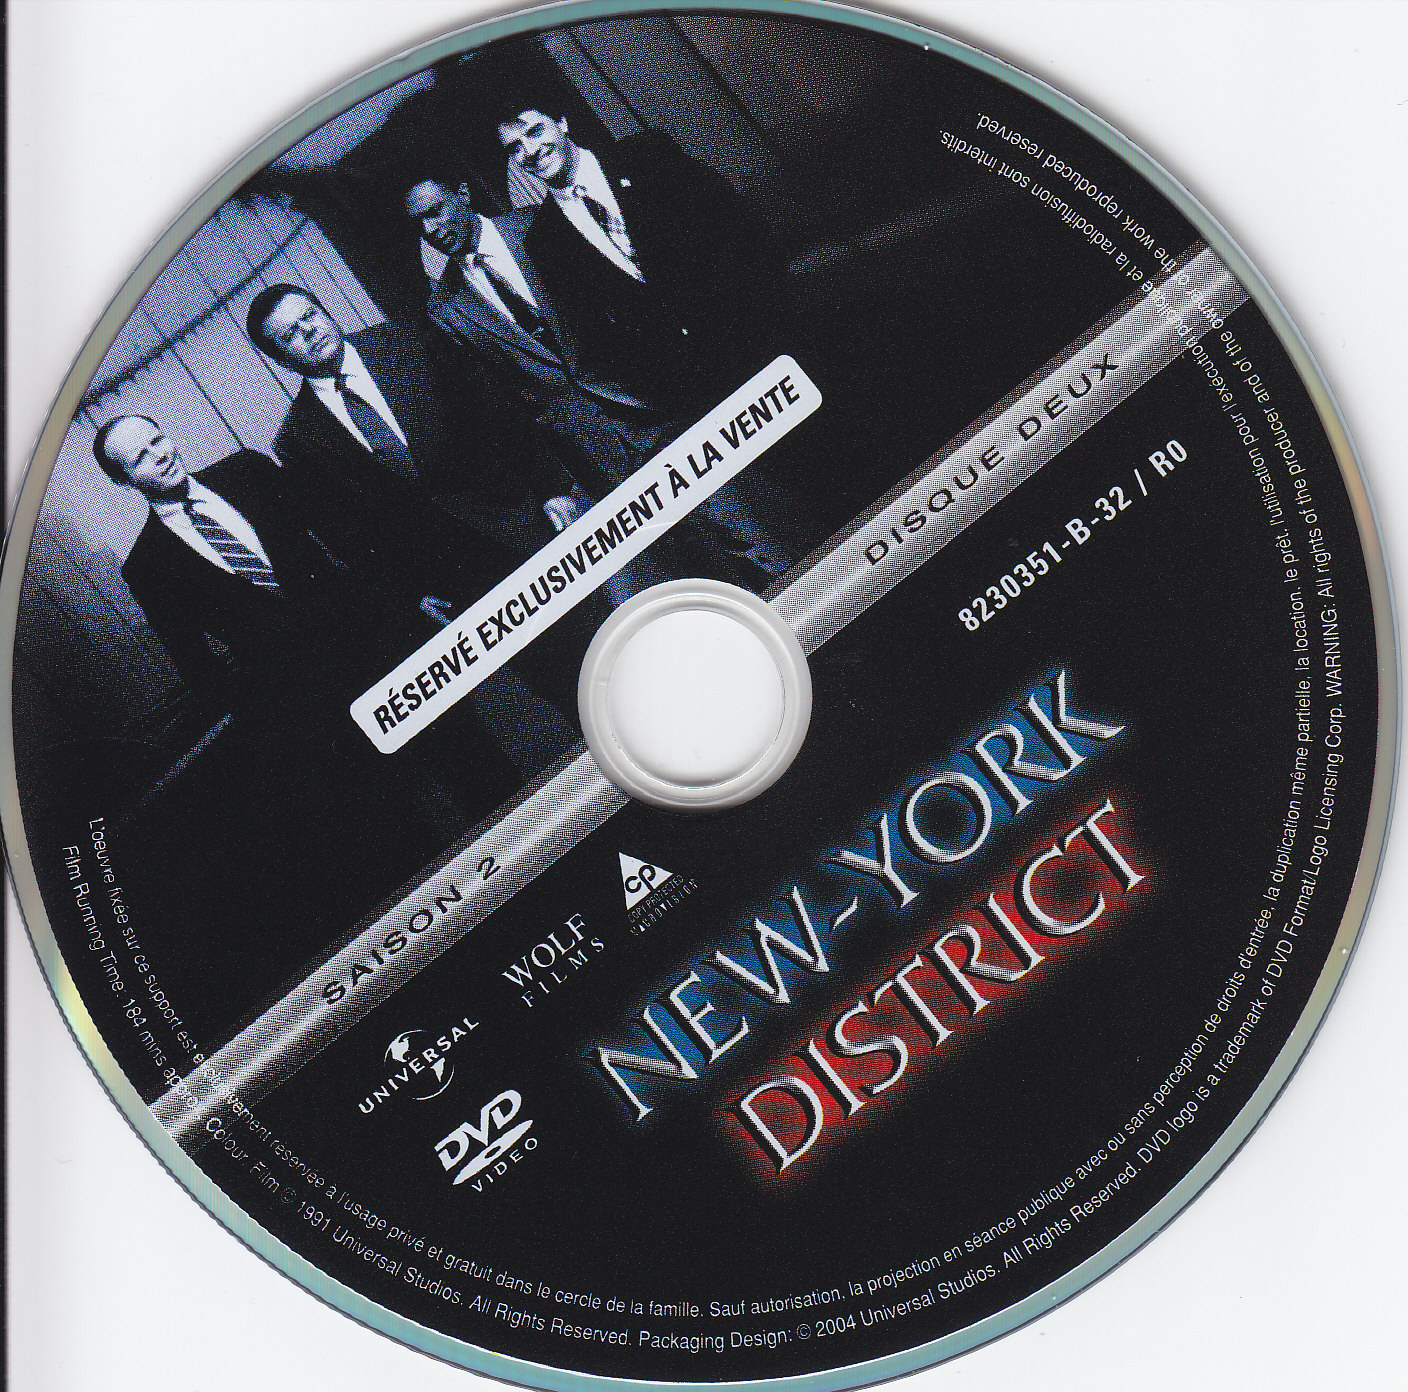 New York district Saison 2 DISC 2